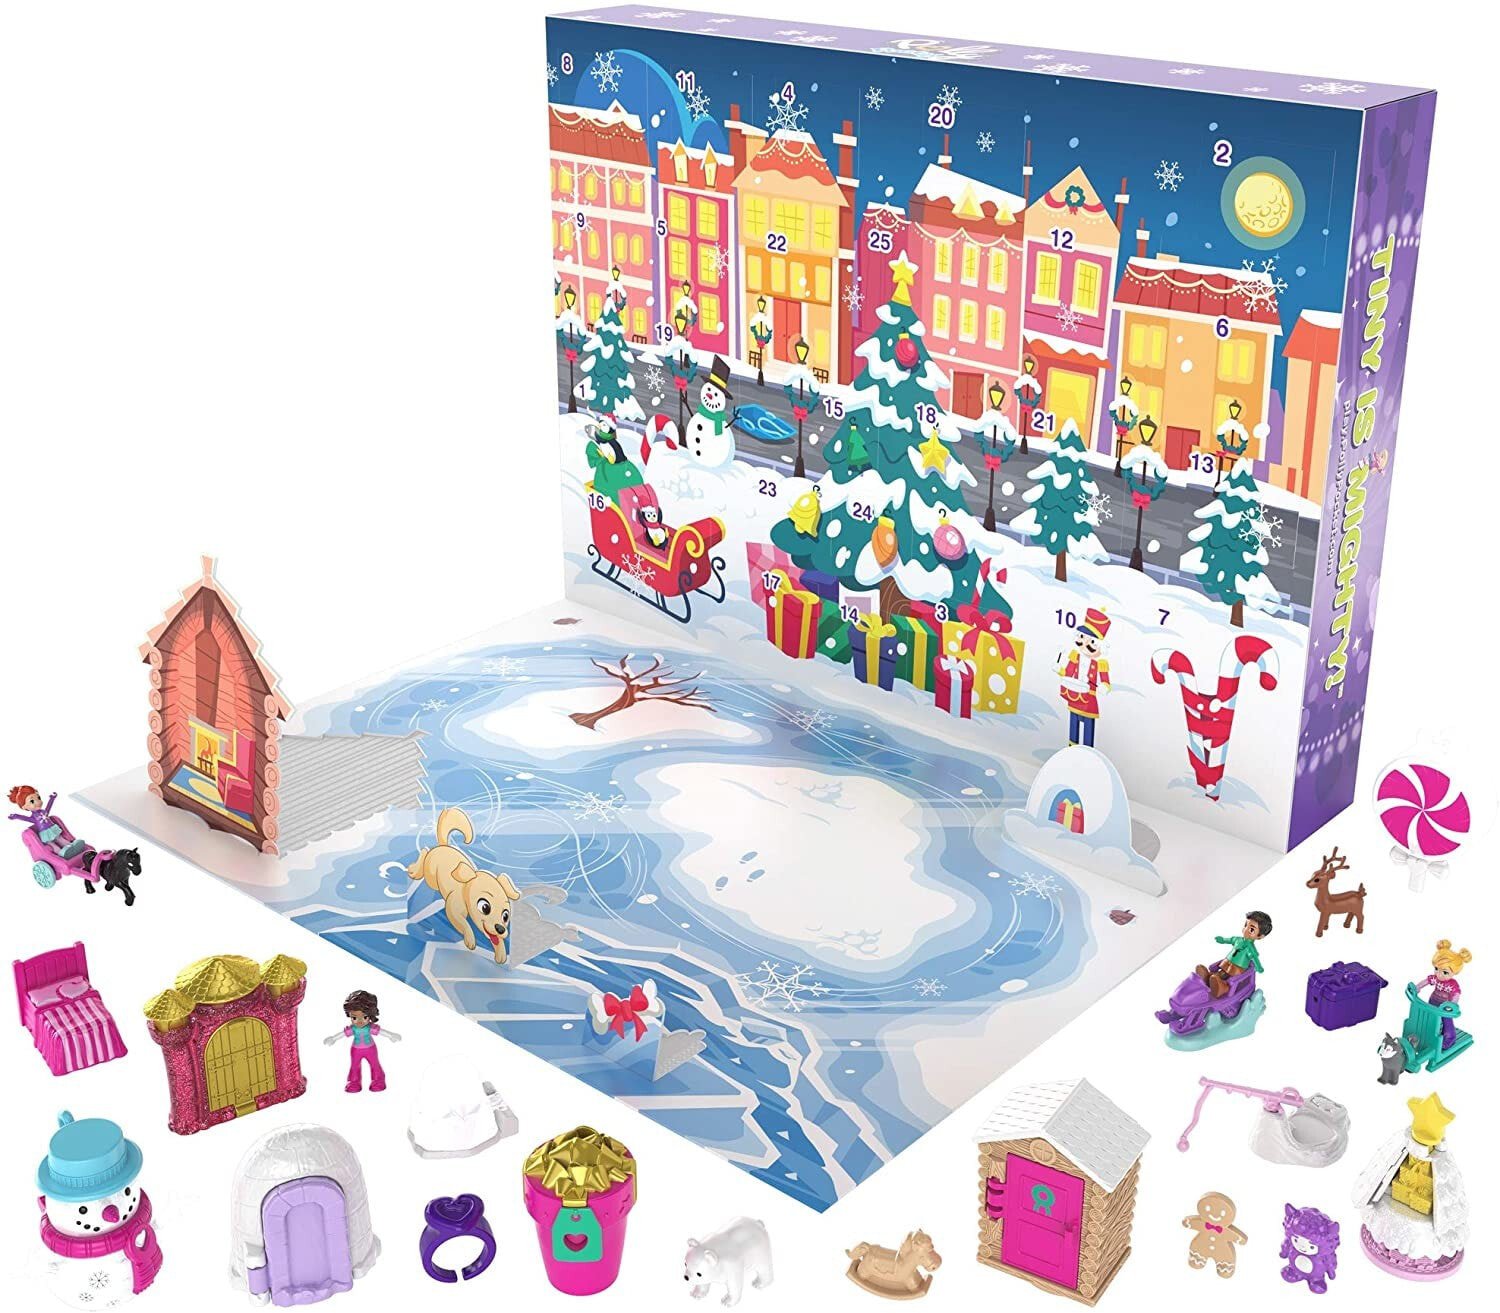 Адвент-календарь Polly Pocket GKL46 Зимняя страна чудес, с 25 сюрпризами